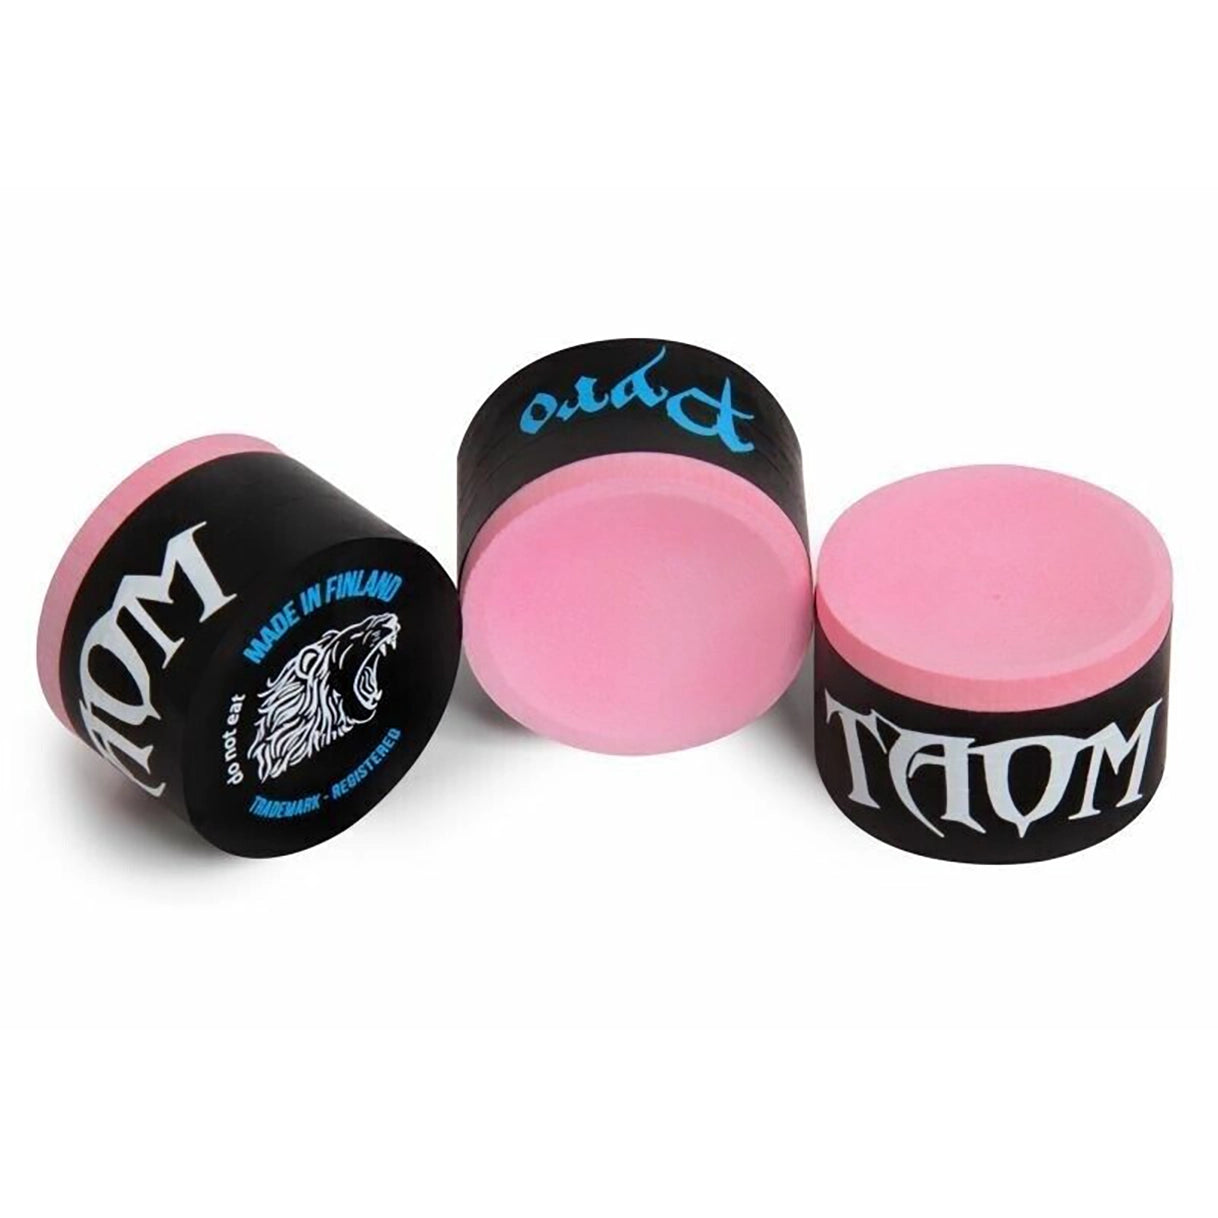 Taom Pyro Chalk. Pink